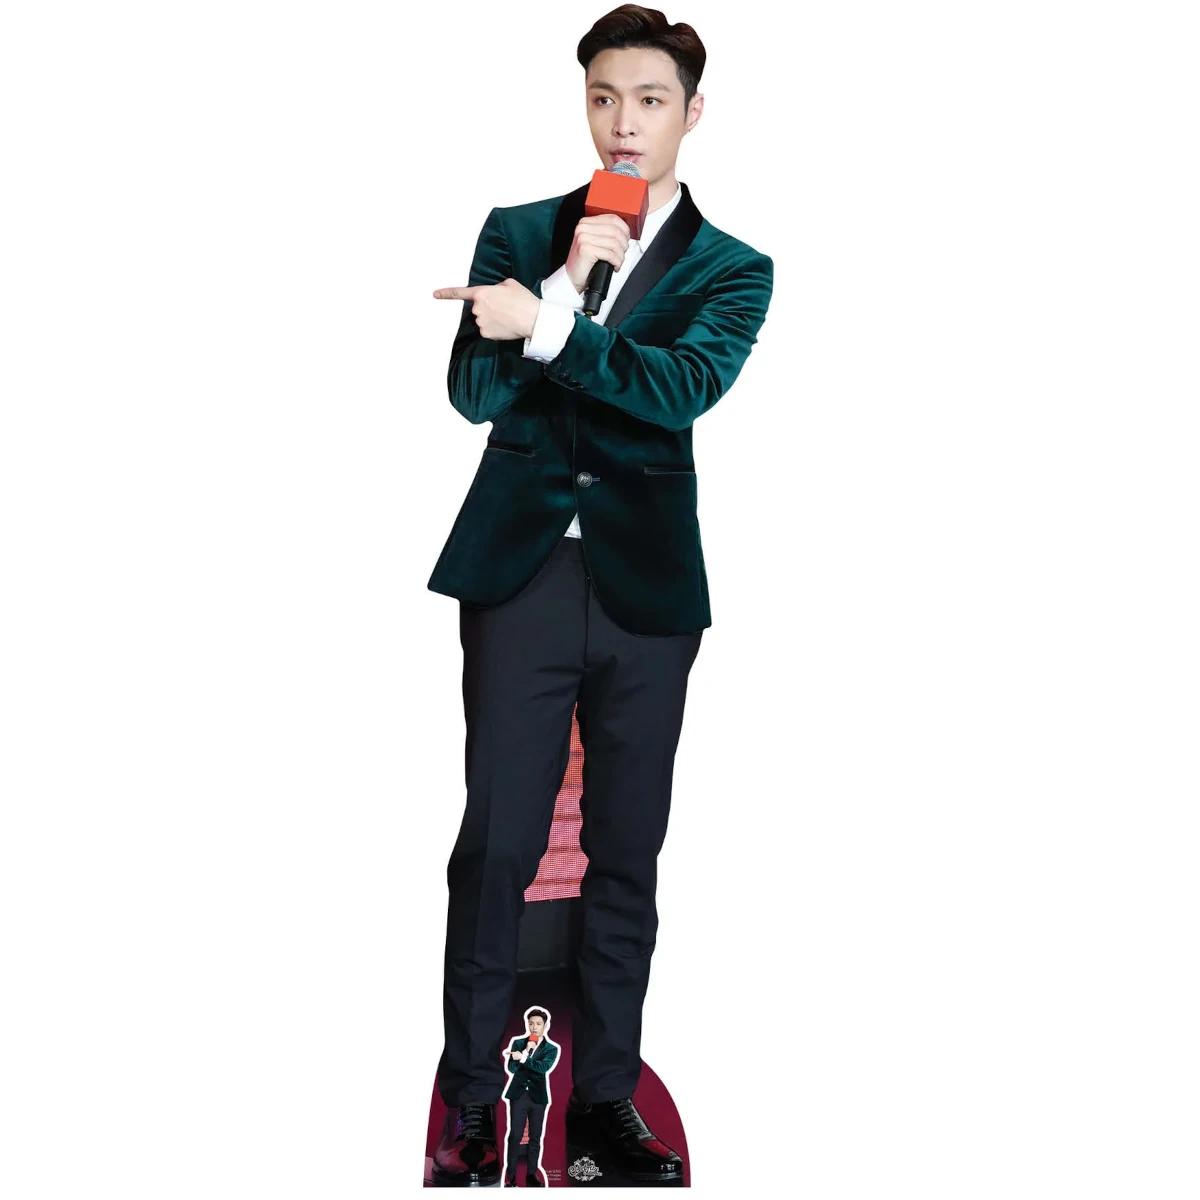 CS777 Lay Zhang 'Exo' (Chinese Rapper) Lifesize + Mini Cardboard Cutout Standee Front